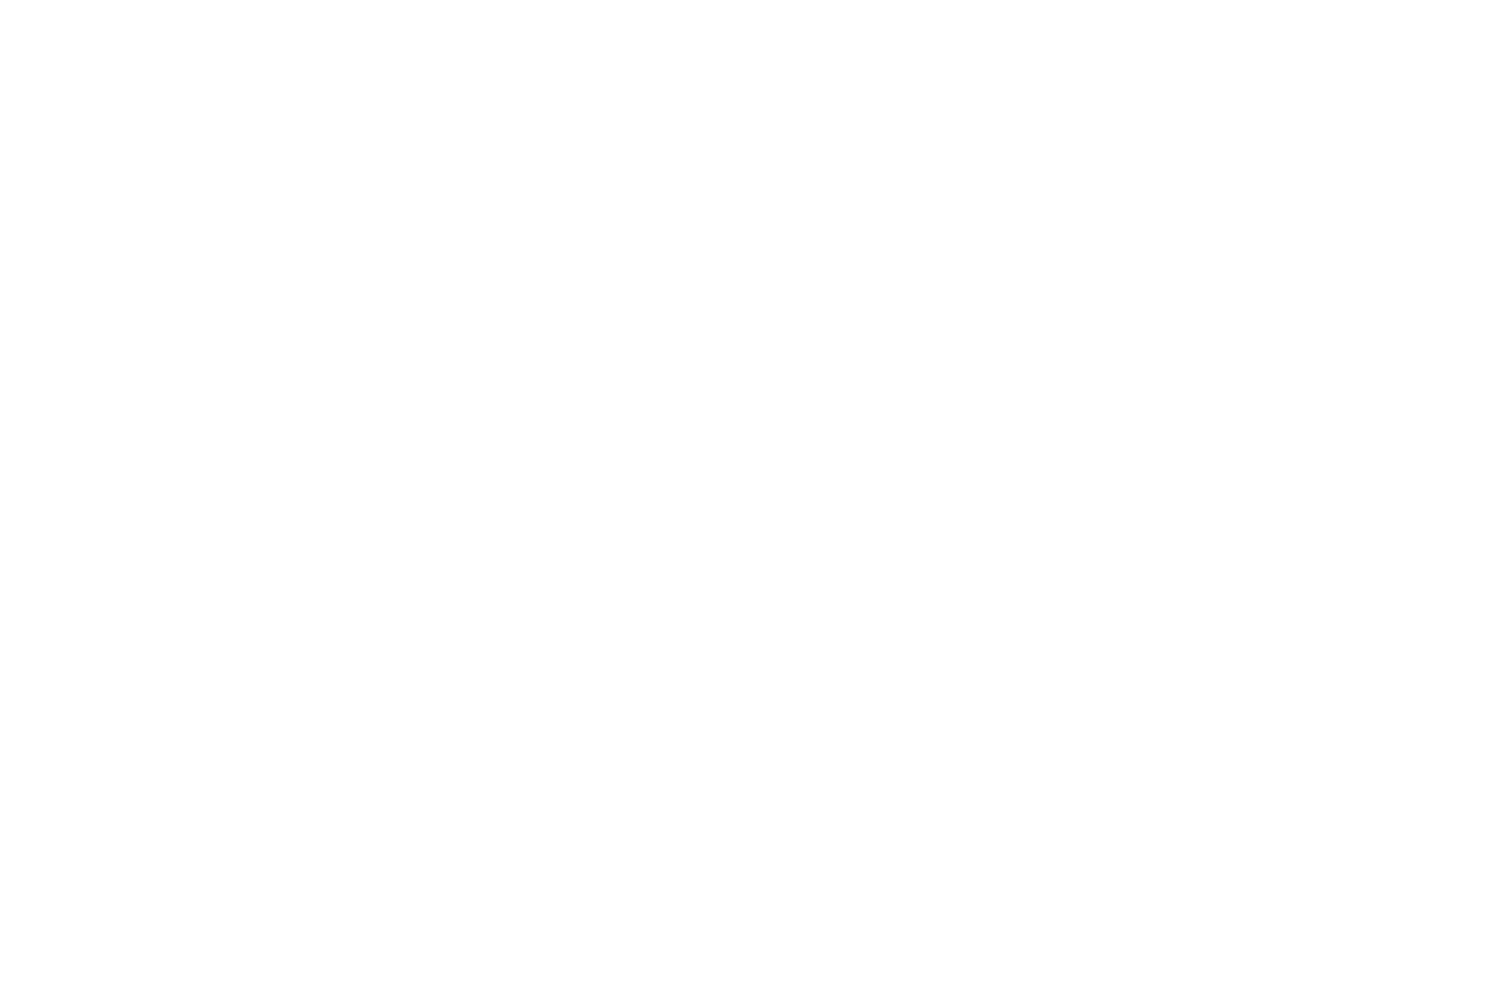 Kunde stilwerk: Jubiläums-Logo mit roter 15